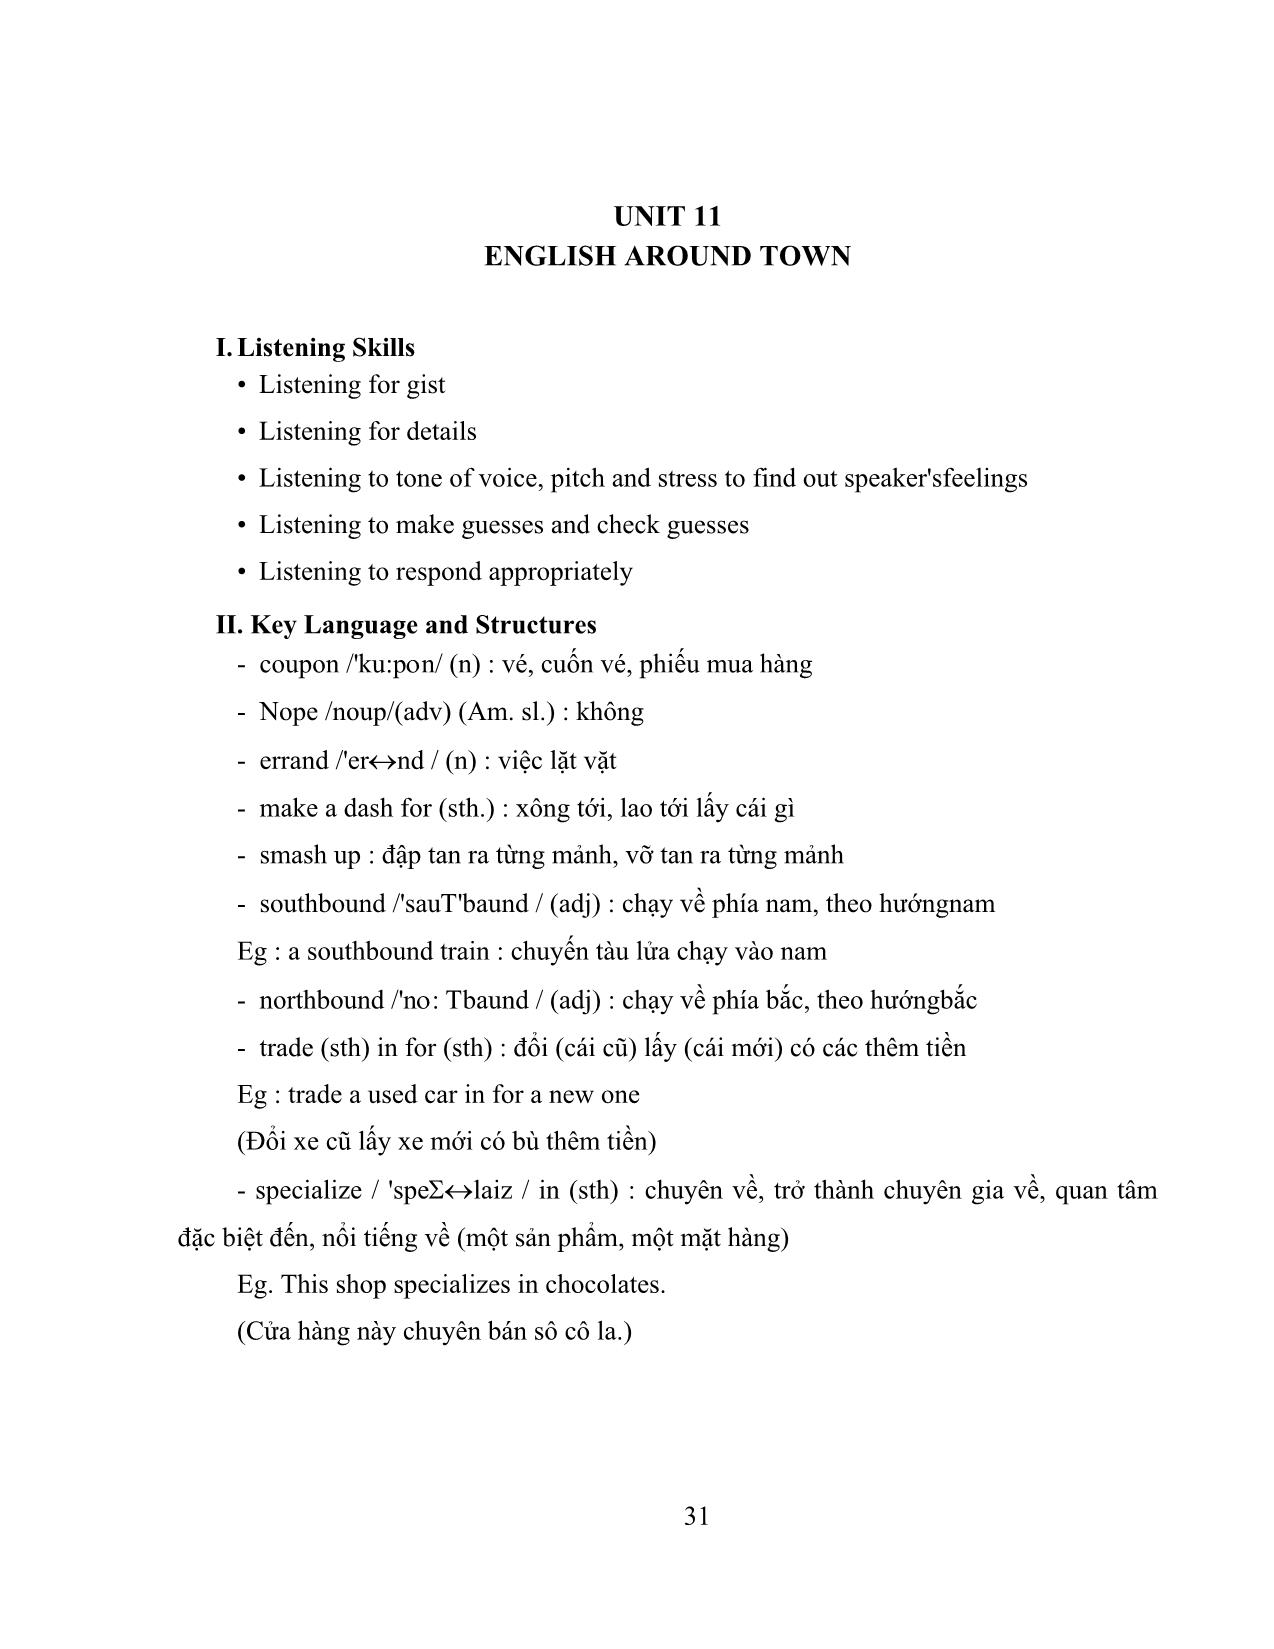 Tiếng Anh - Unit 11: English around town trang 1